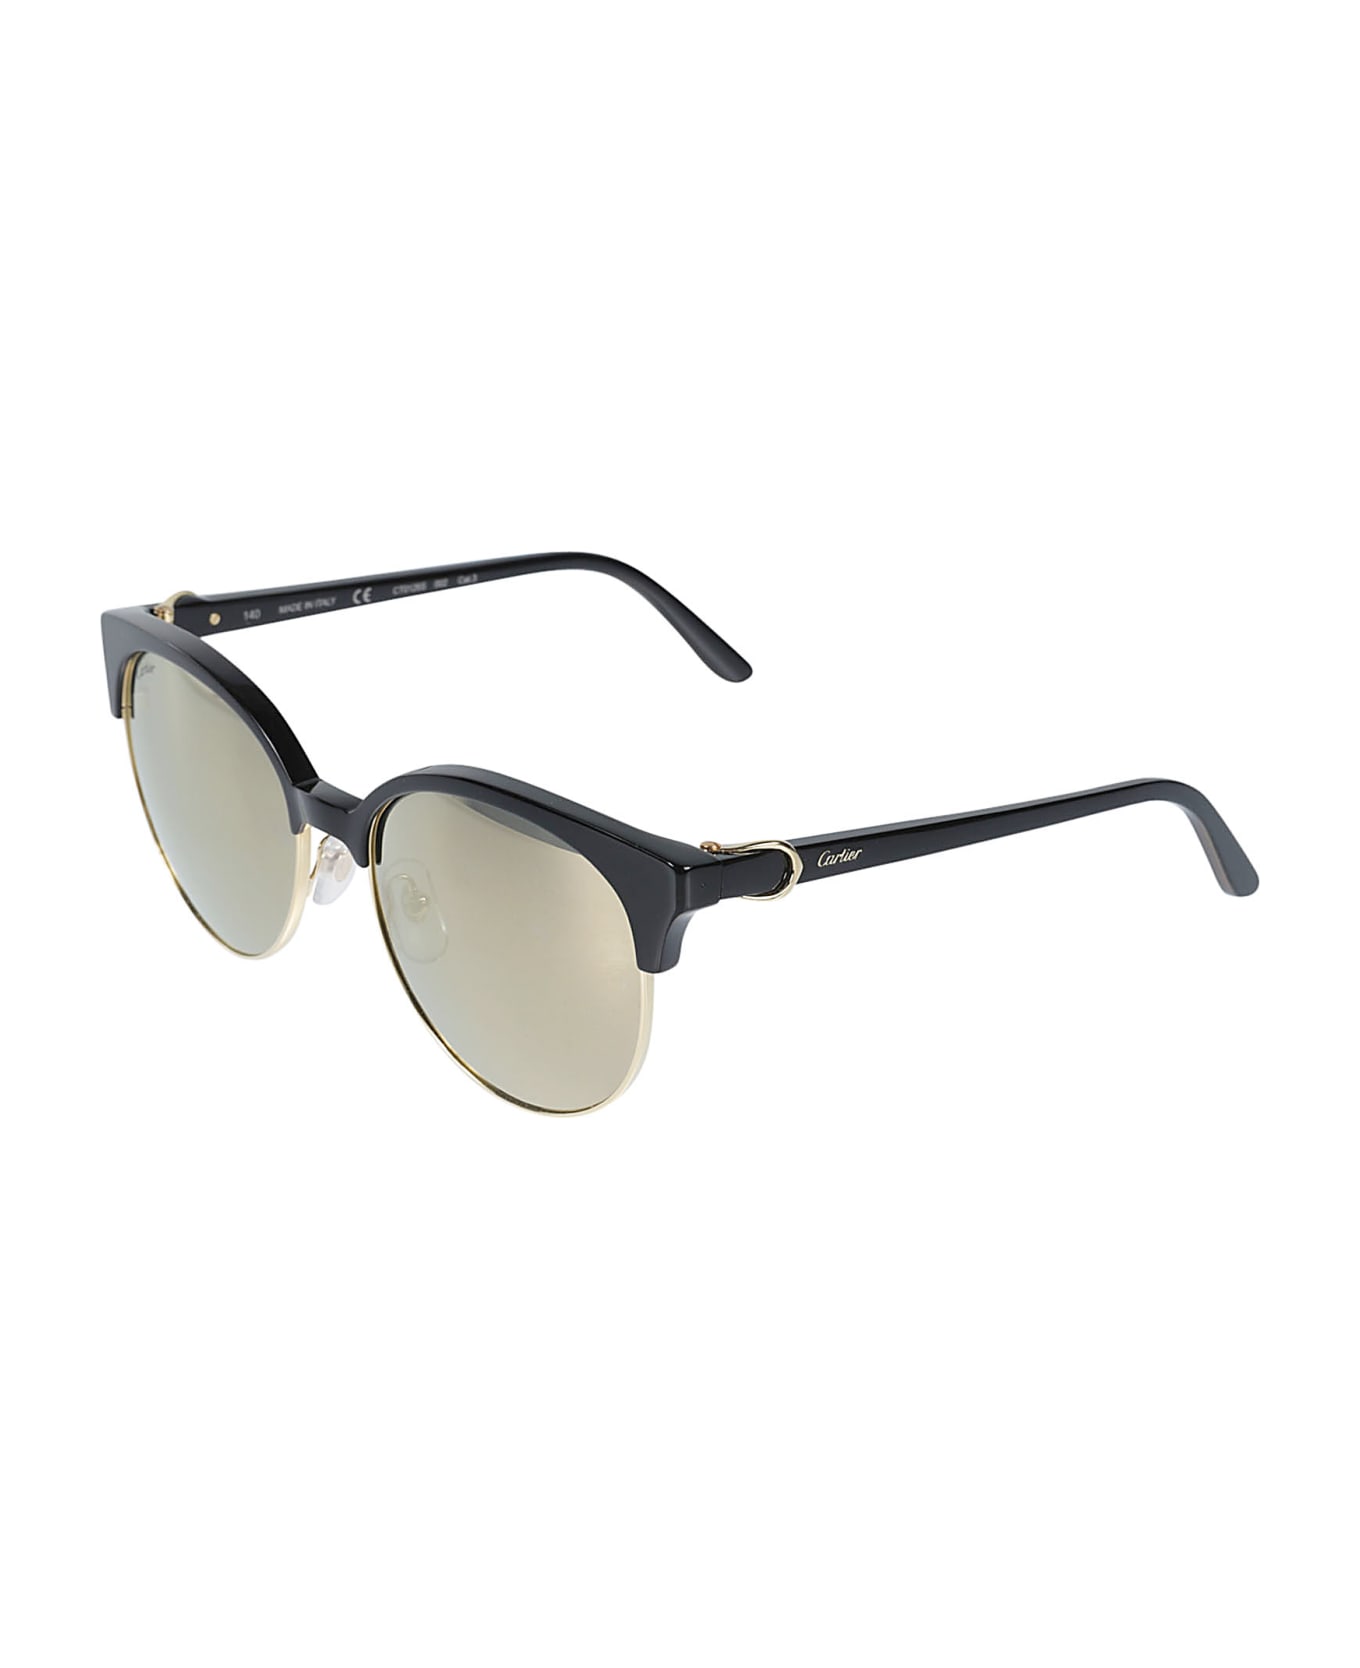 Cartier Eyewear Clubmaster Style BB0181S Sunglasses - Black